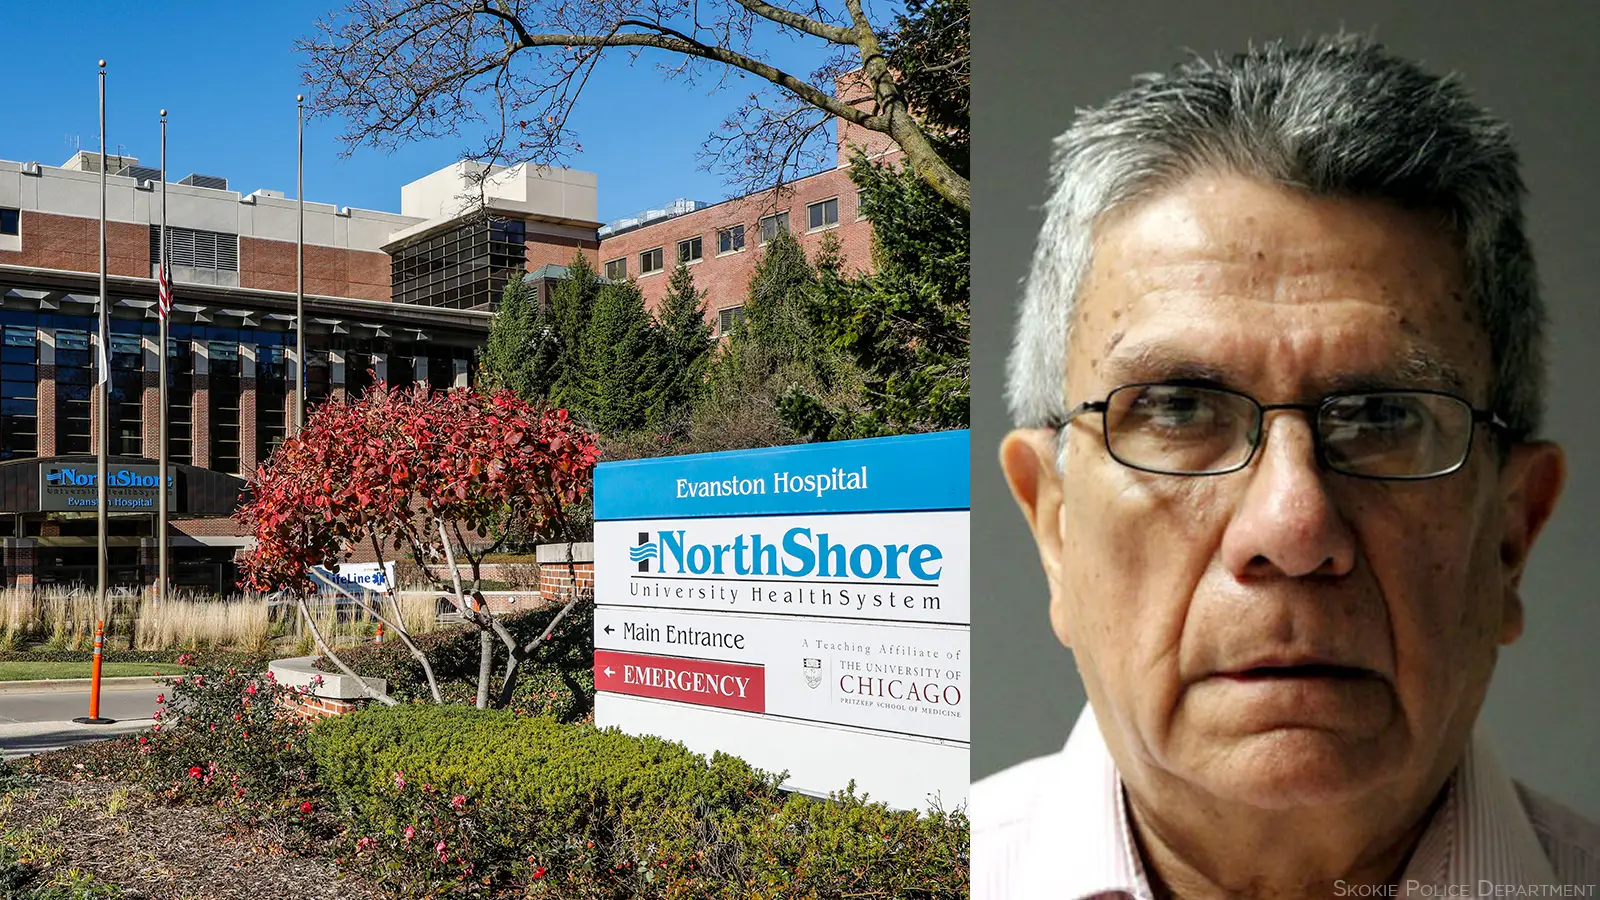 Jane Doe 34 alleges sexual assault by Gynecologist Fabio Ortega, NorthShore University HealthSystem